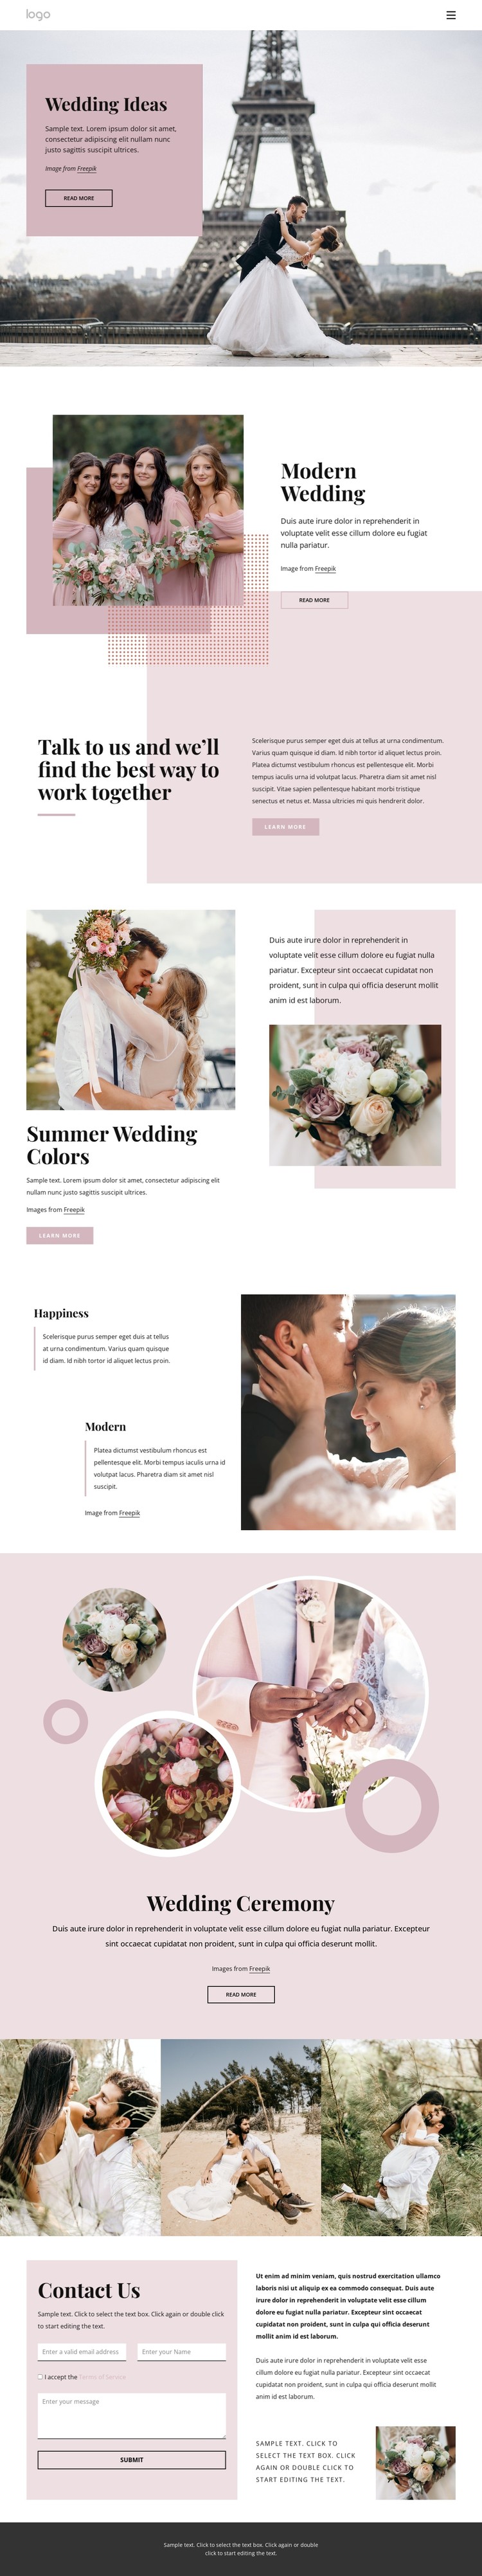 Unique wedding ceremony CSS Template